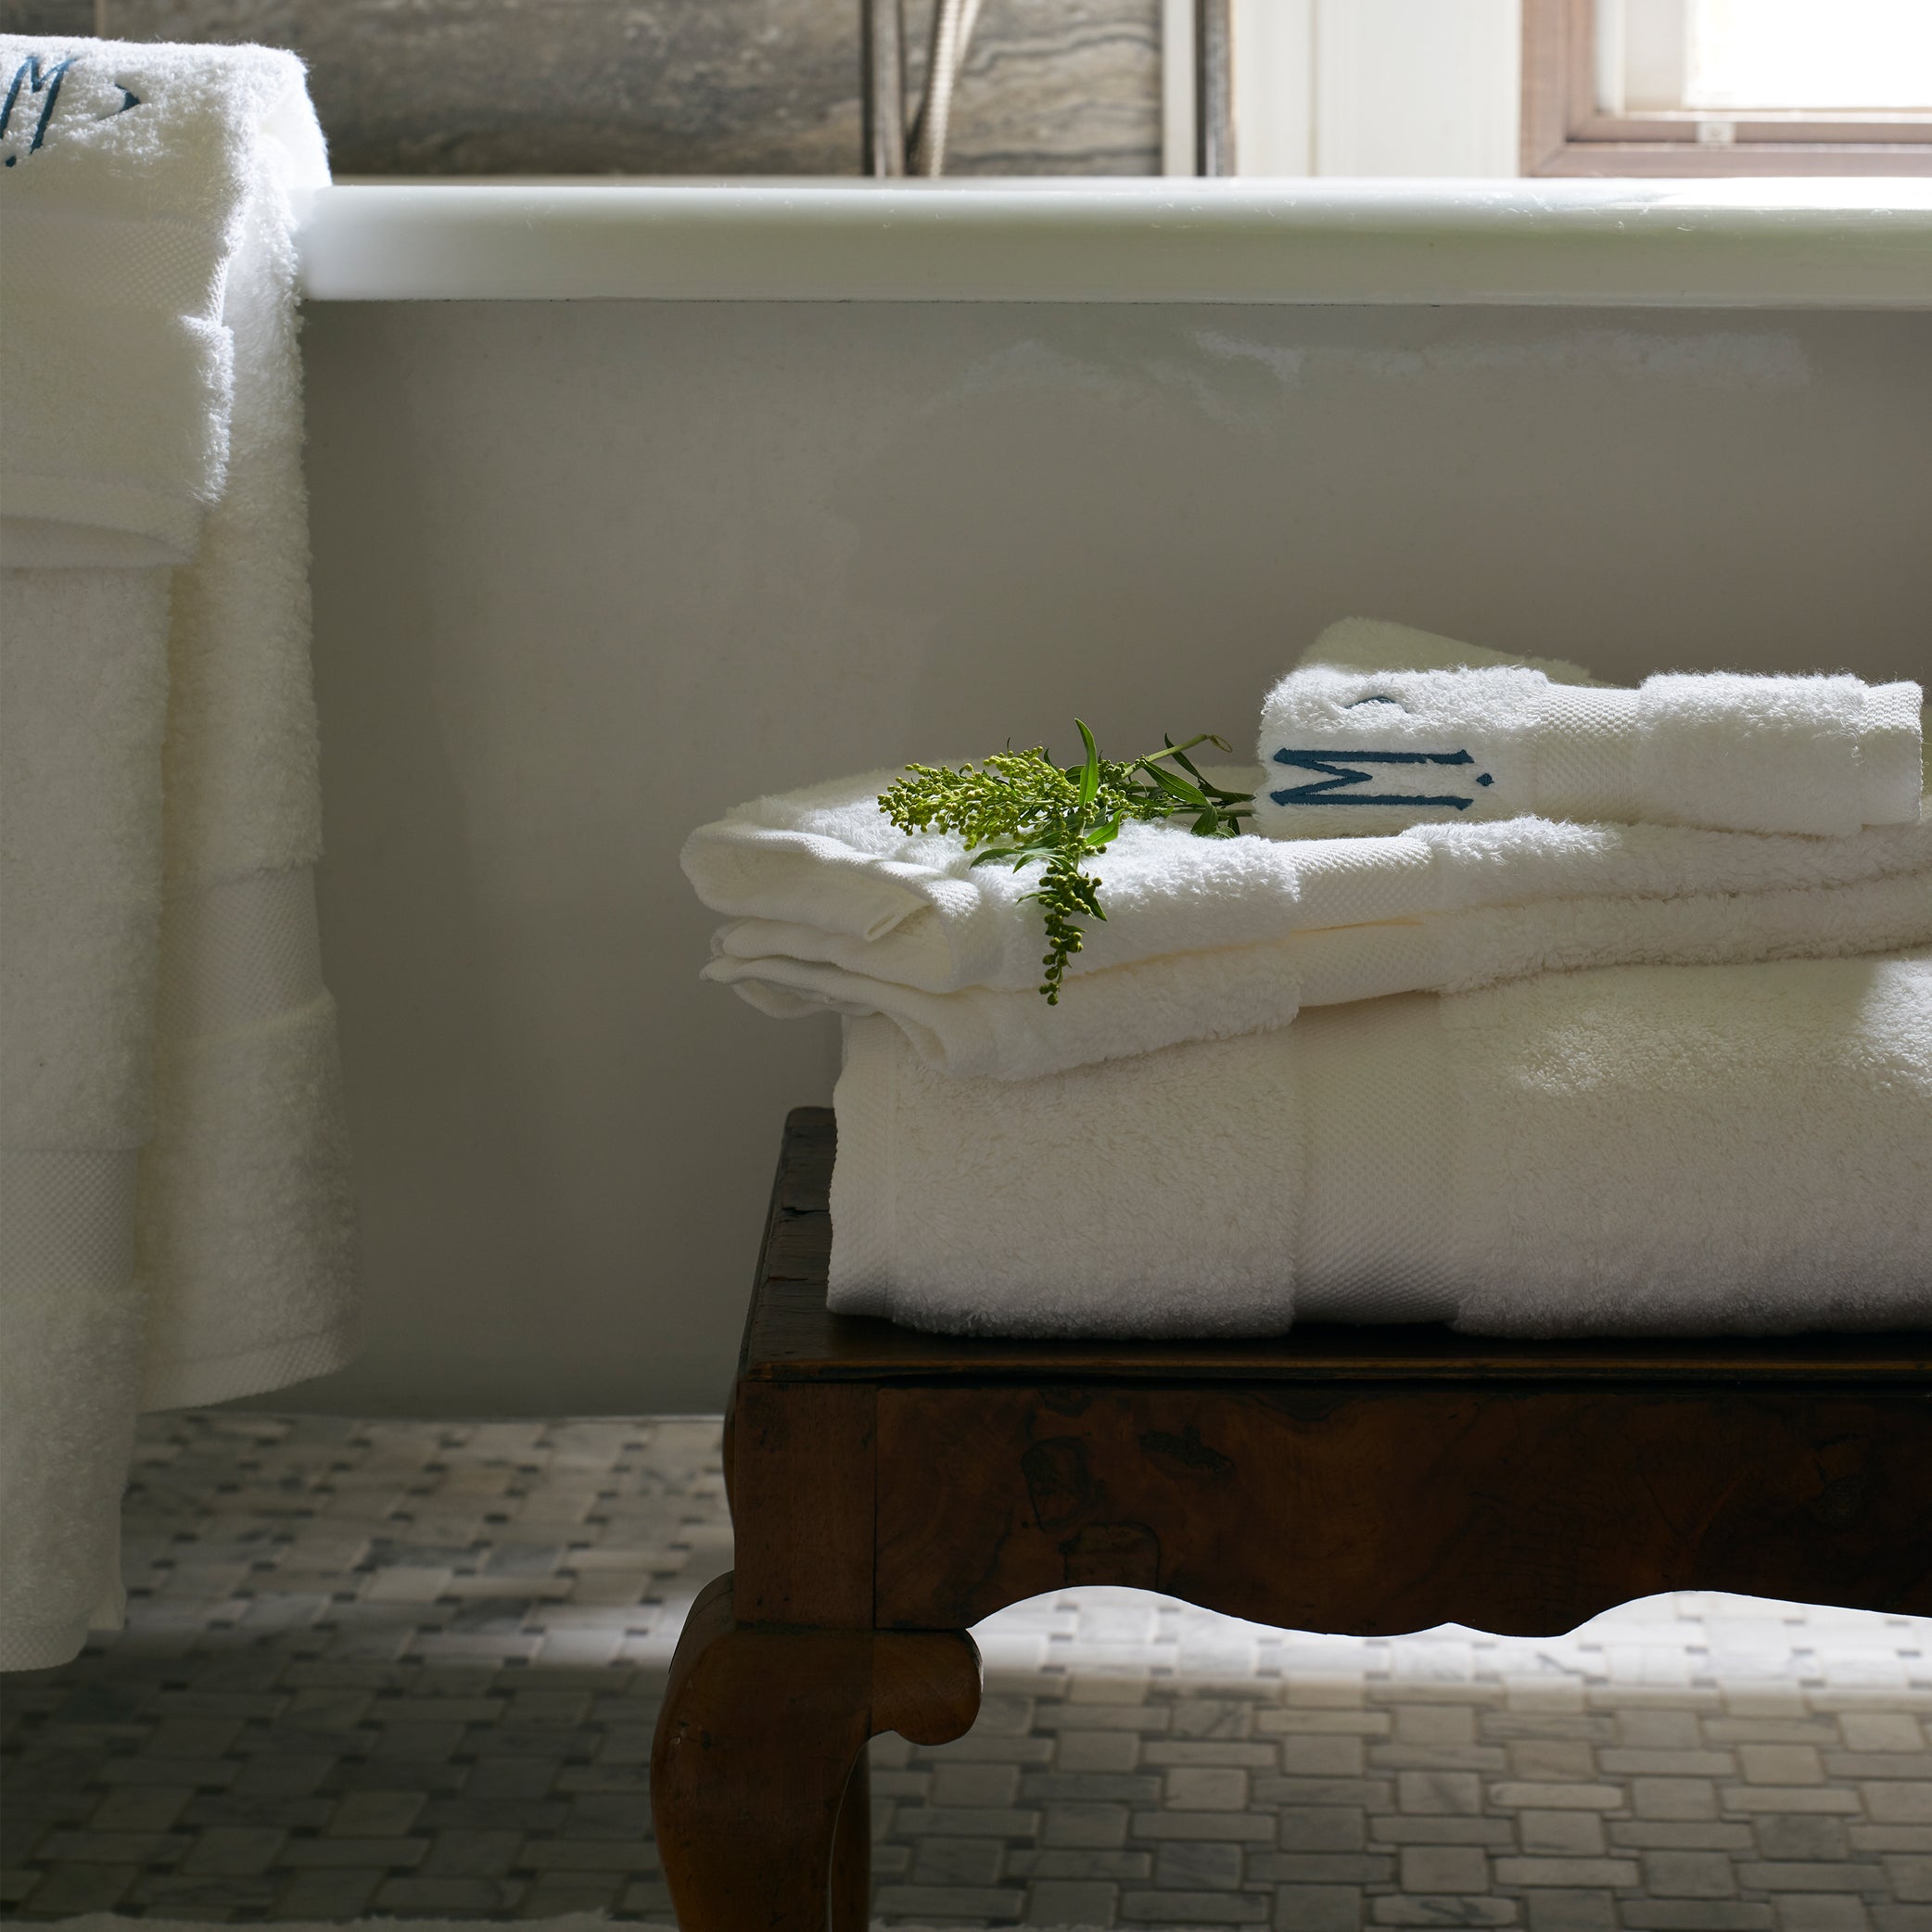 Lotus Towels  Matouk Luxury Linens